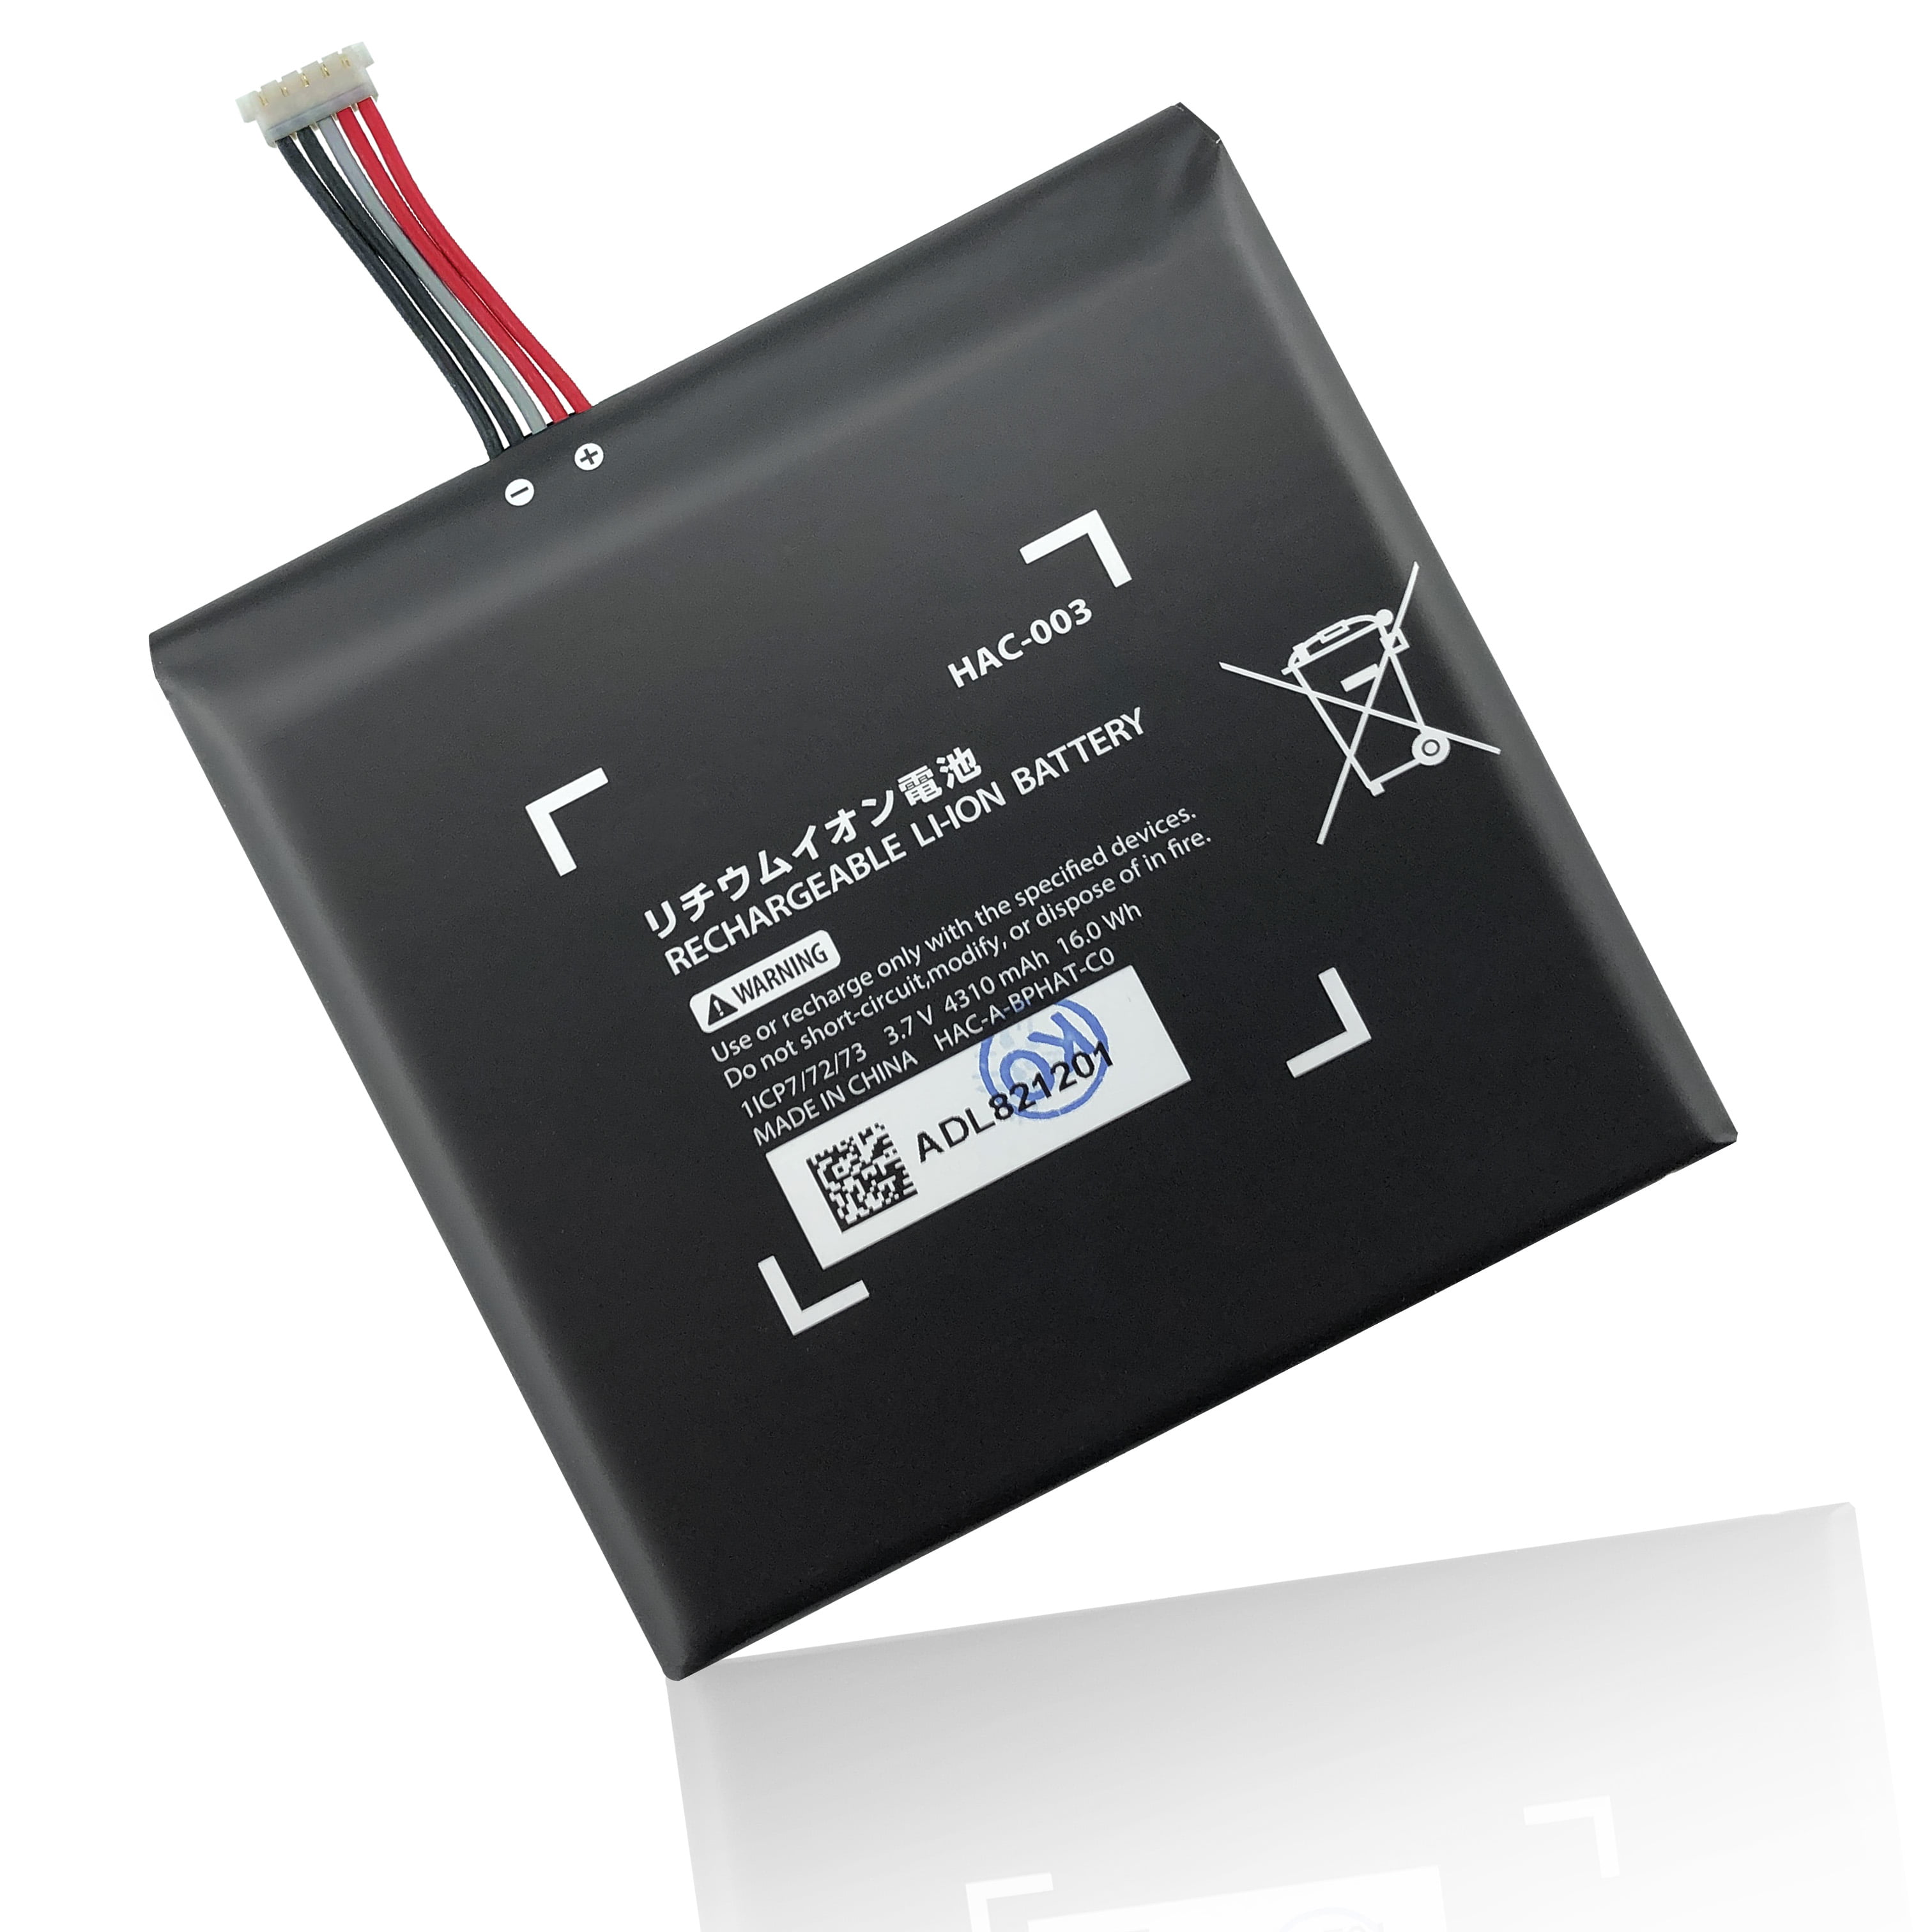 Batterie pour Nintendo Switch Lite 3570 mah HDH-003 - Straße Game